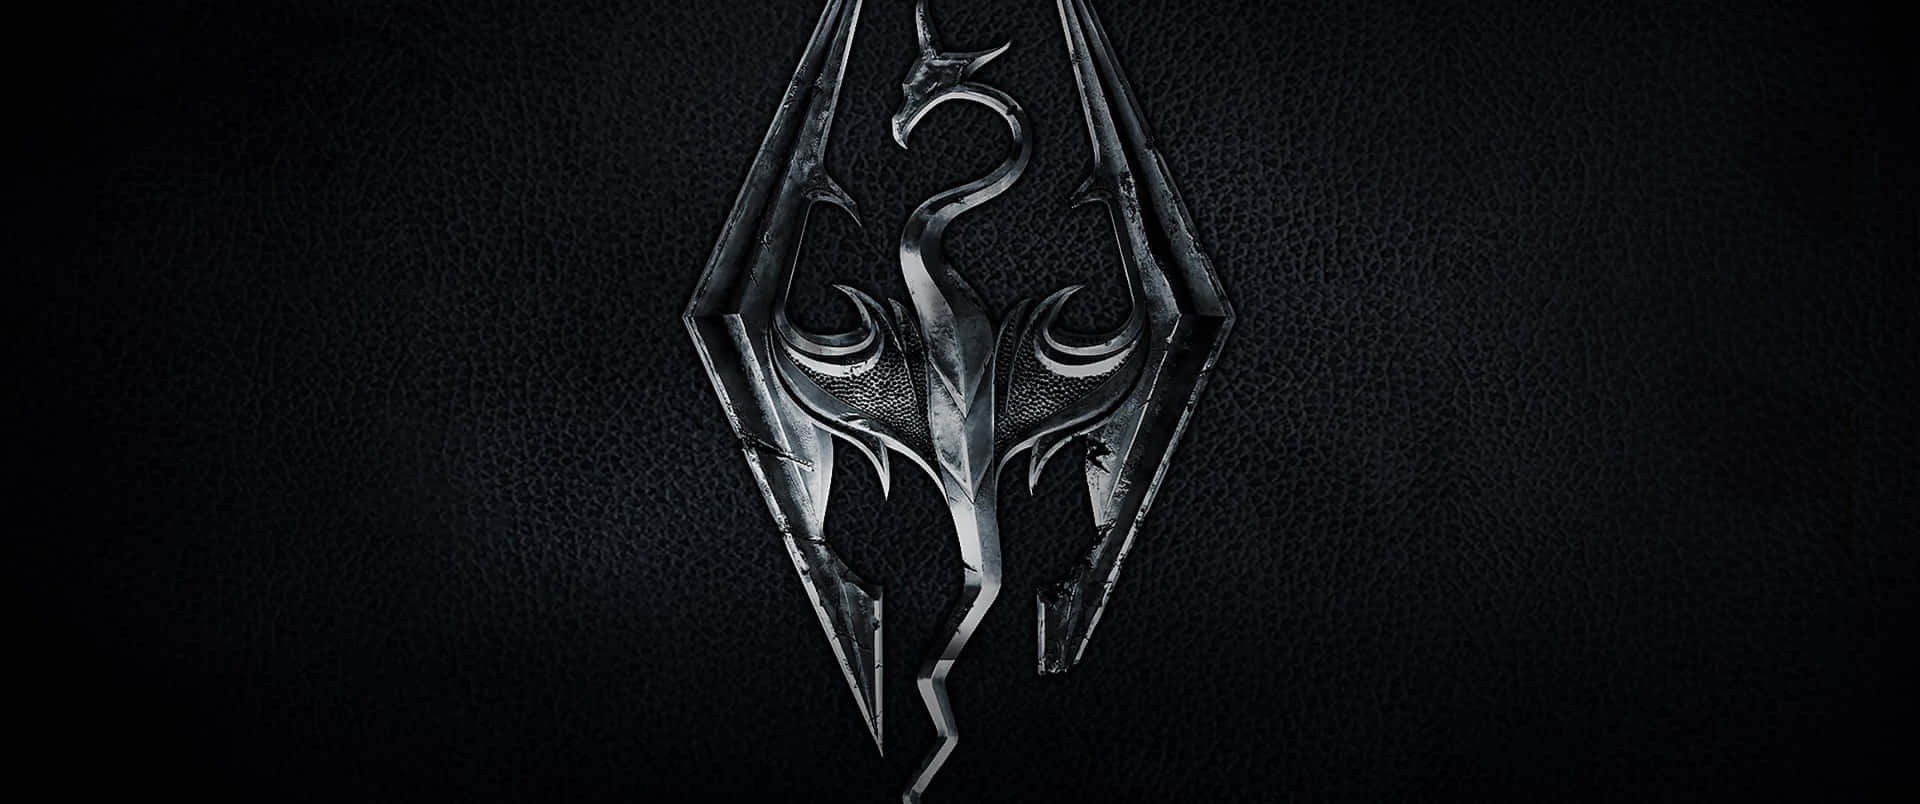 The Elder Scrolls Iii Logo On A Black Background